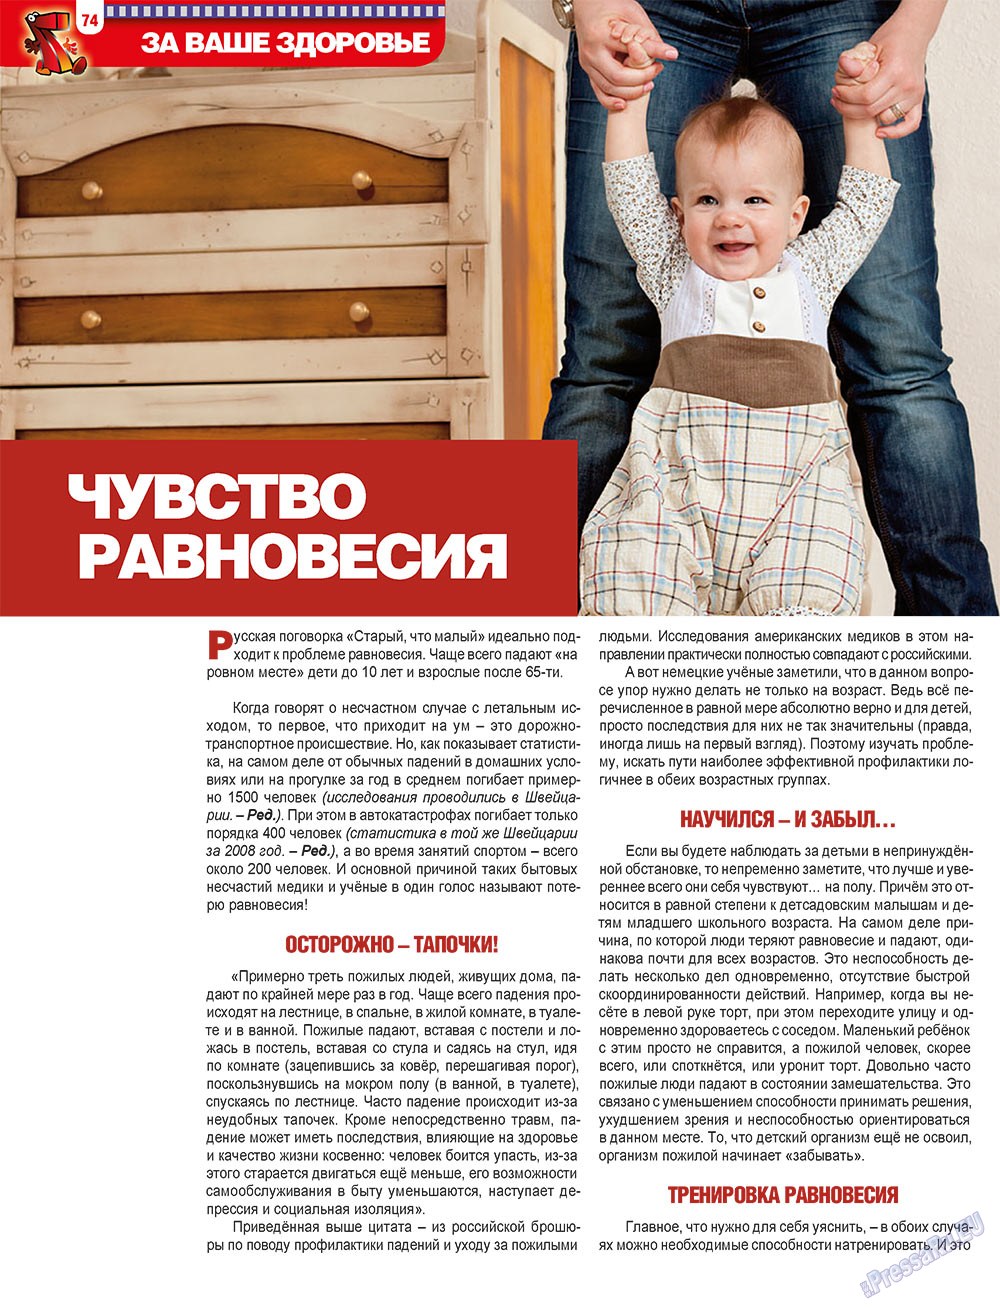 7плюс7я (журнал). 2011 год, номер 8, стр. 74